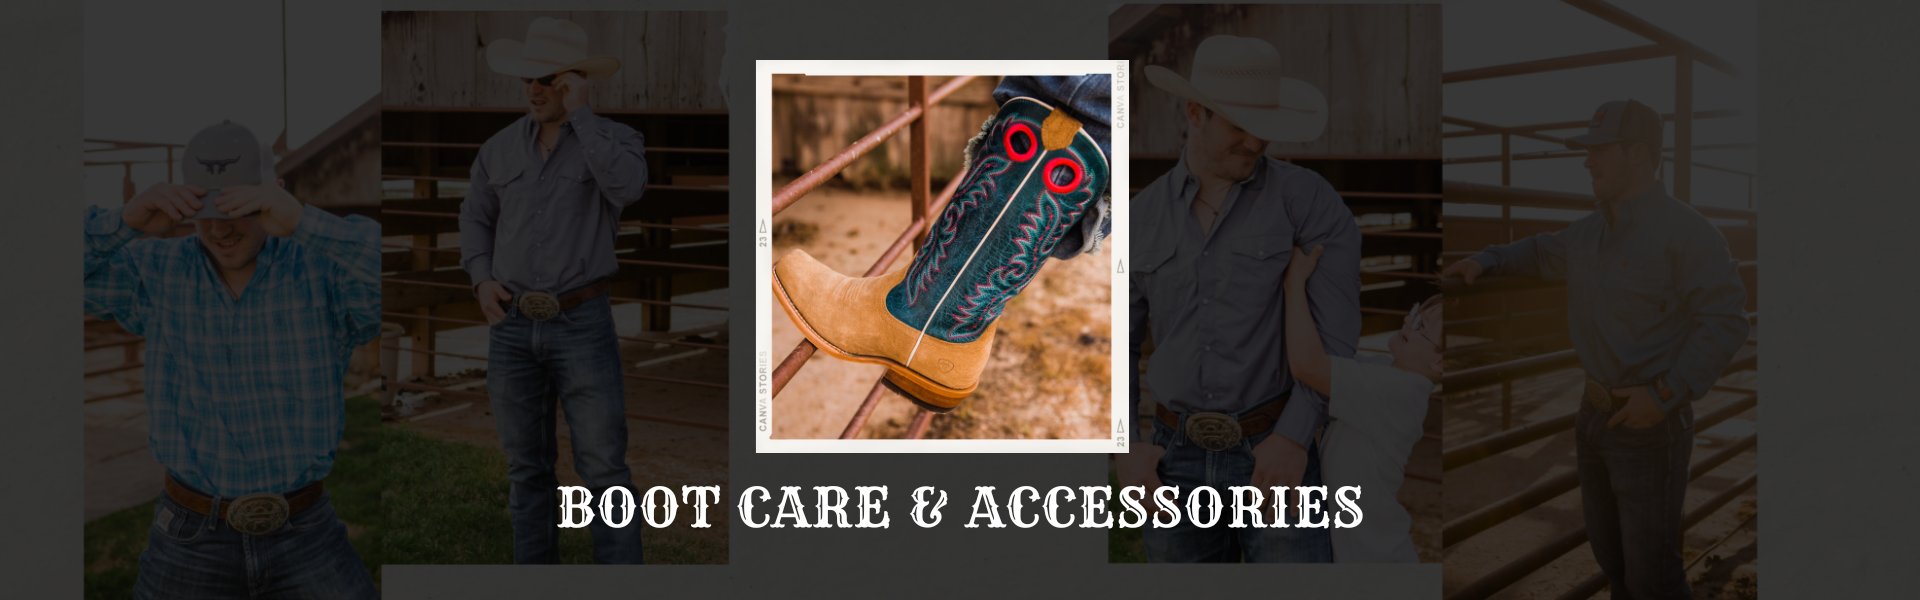 Boot Care & Accessories